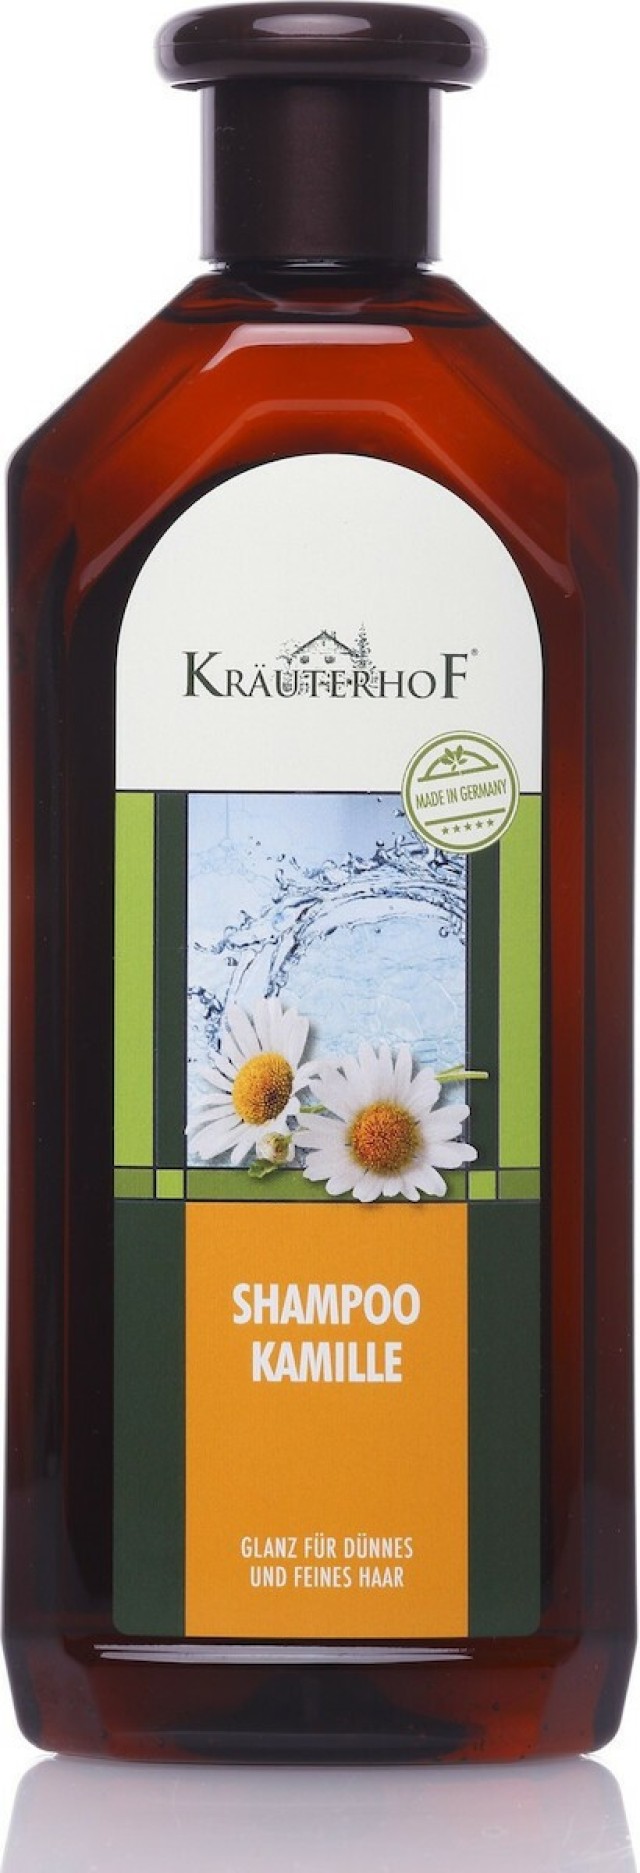 Krauterhof Shampoo Kamille - Απαλό Σαμπουάν για Λάμψη με εκχύλισμα χαμομηλιού, 500ml